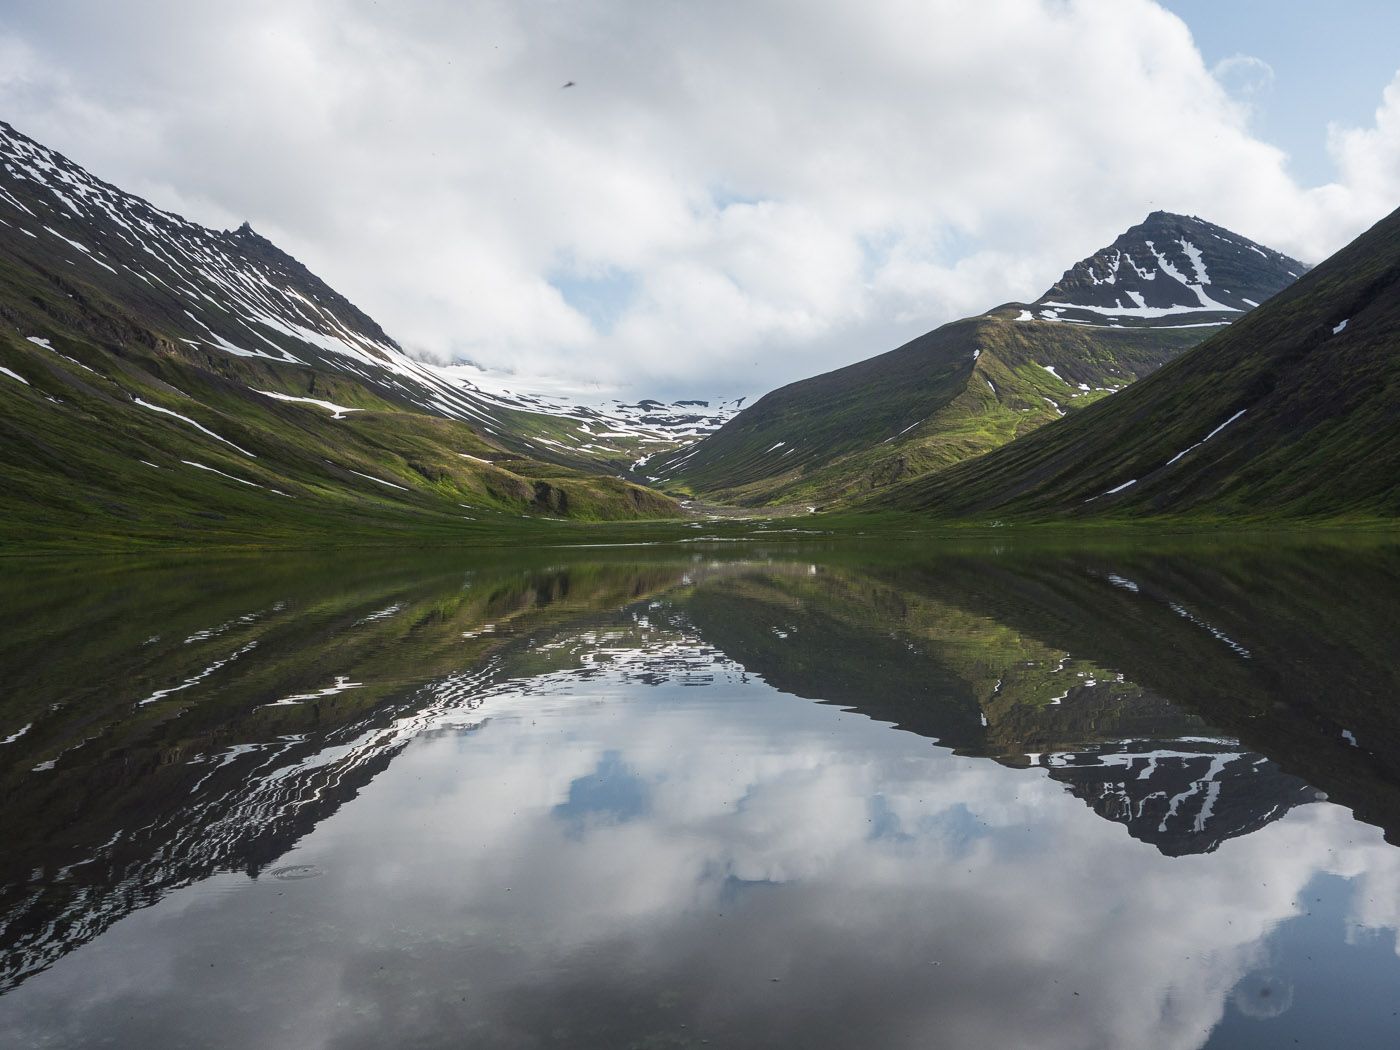 Northern Iceland - Svarfaðardalur. On vacation. - Hiking to lake Skeiðavatn. IX. (21 July 2014)